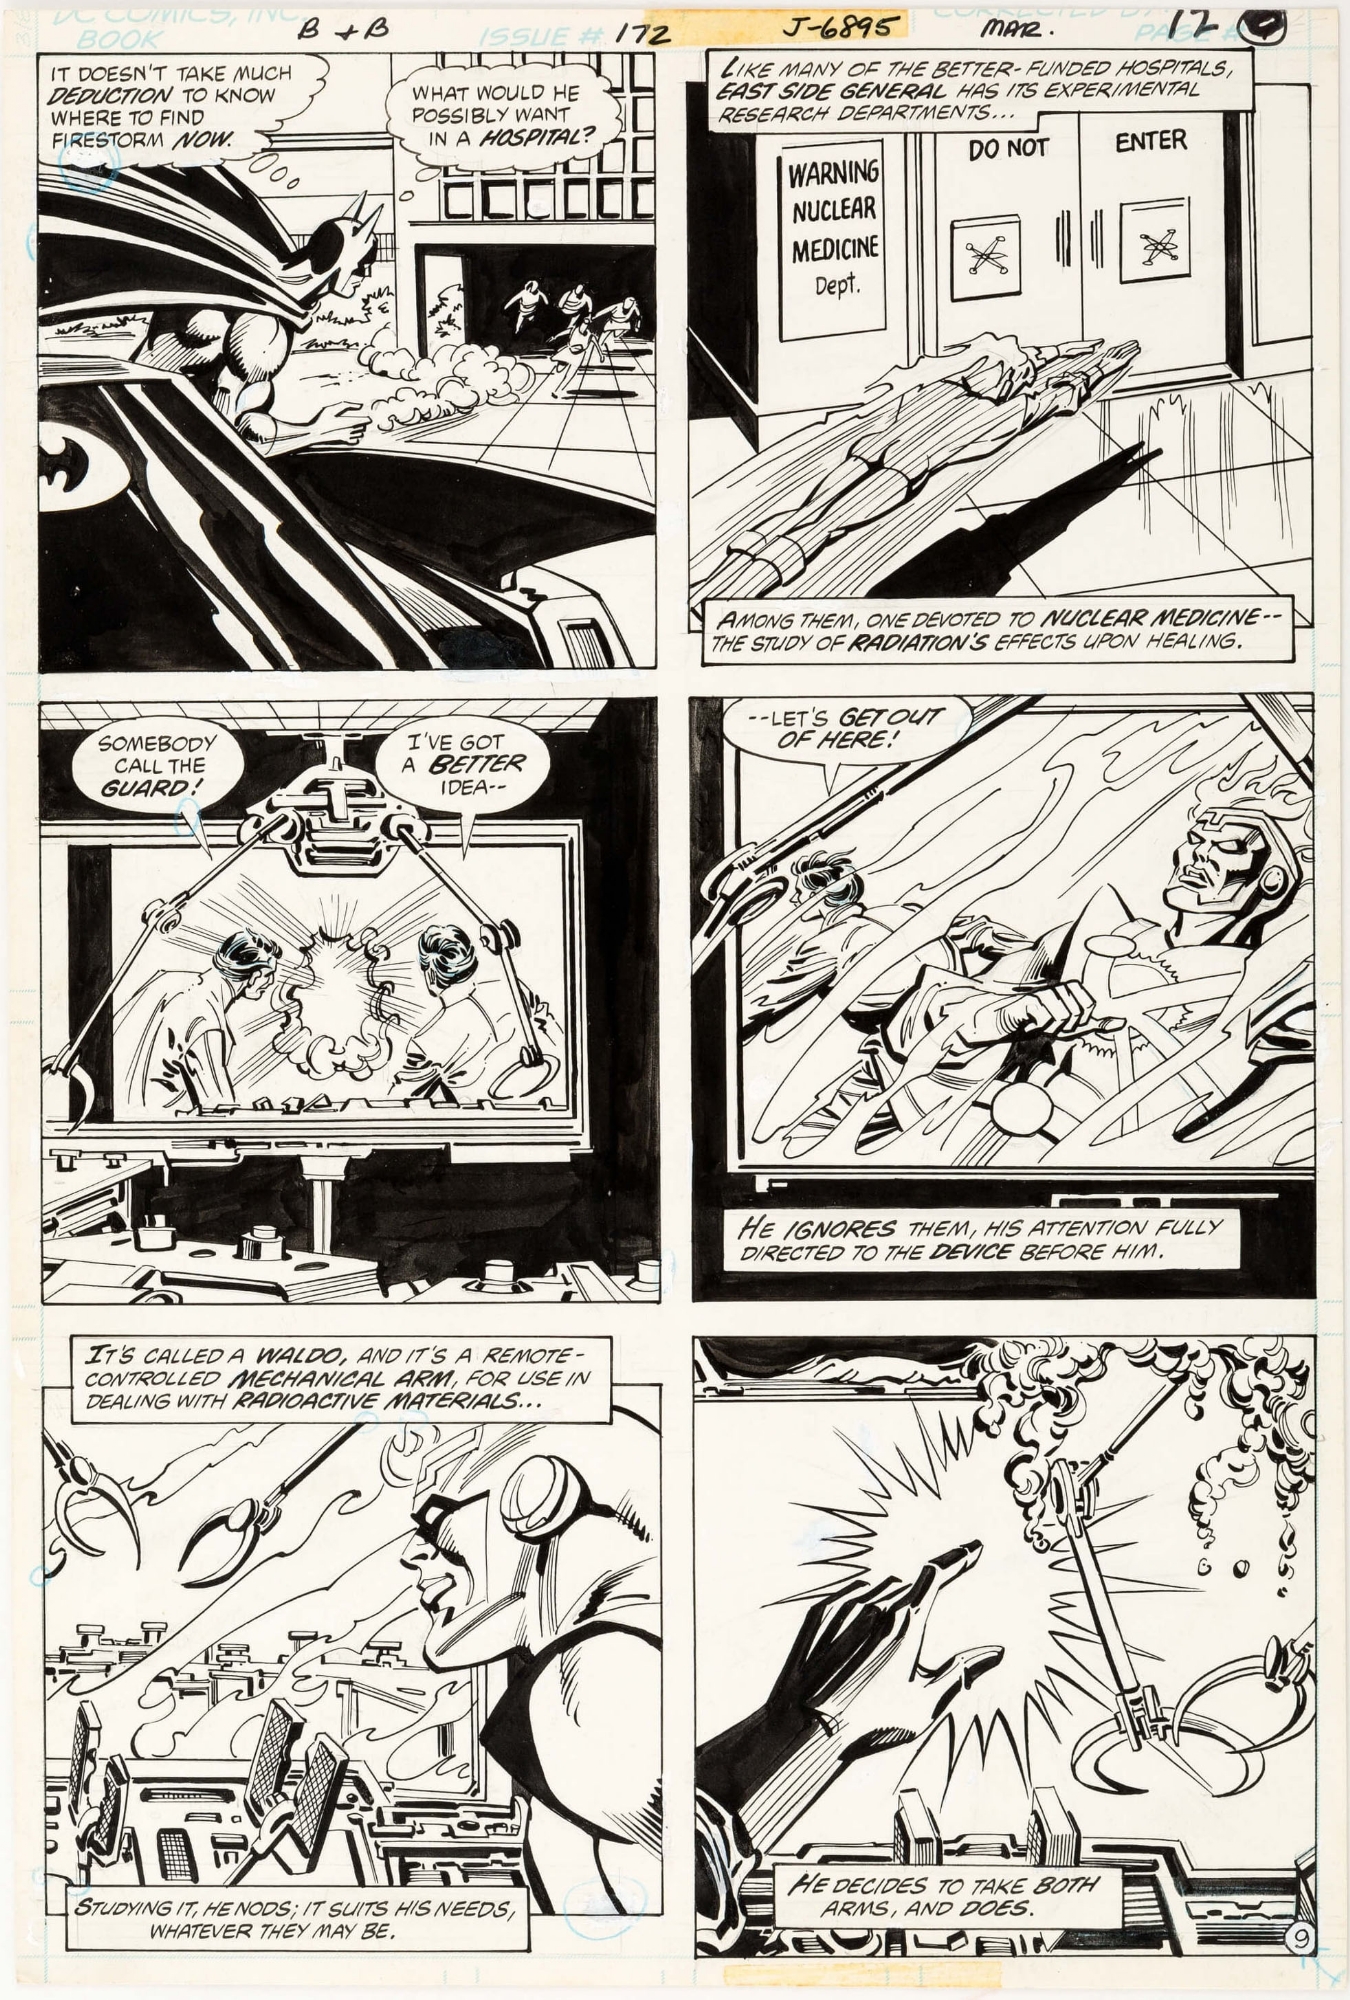 The Brave and the Bold #172 Page 9 BATMAN & FIRESTORM Original Art, in *  Neon Dragon's COMIC ART (SUPERHEROES) - BATMAN Comic Art Gallery Room